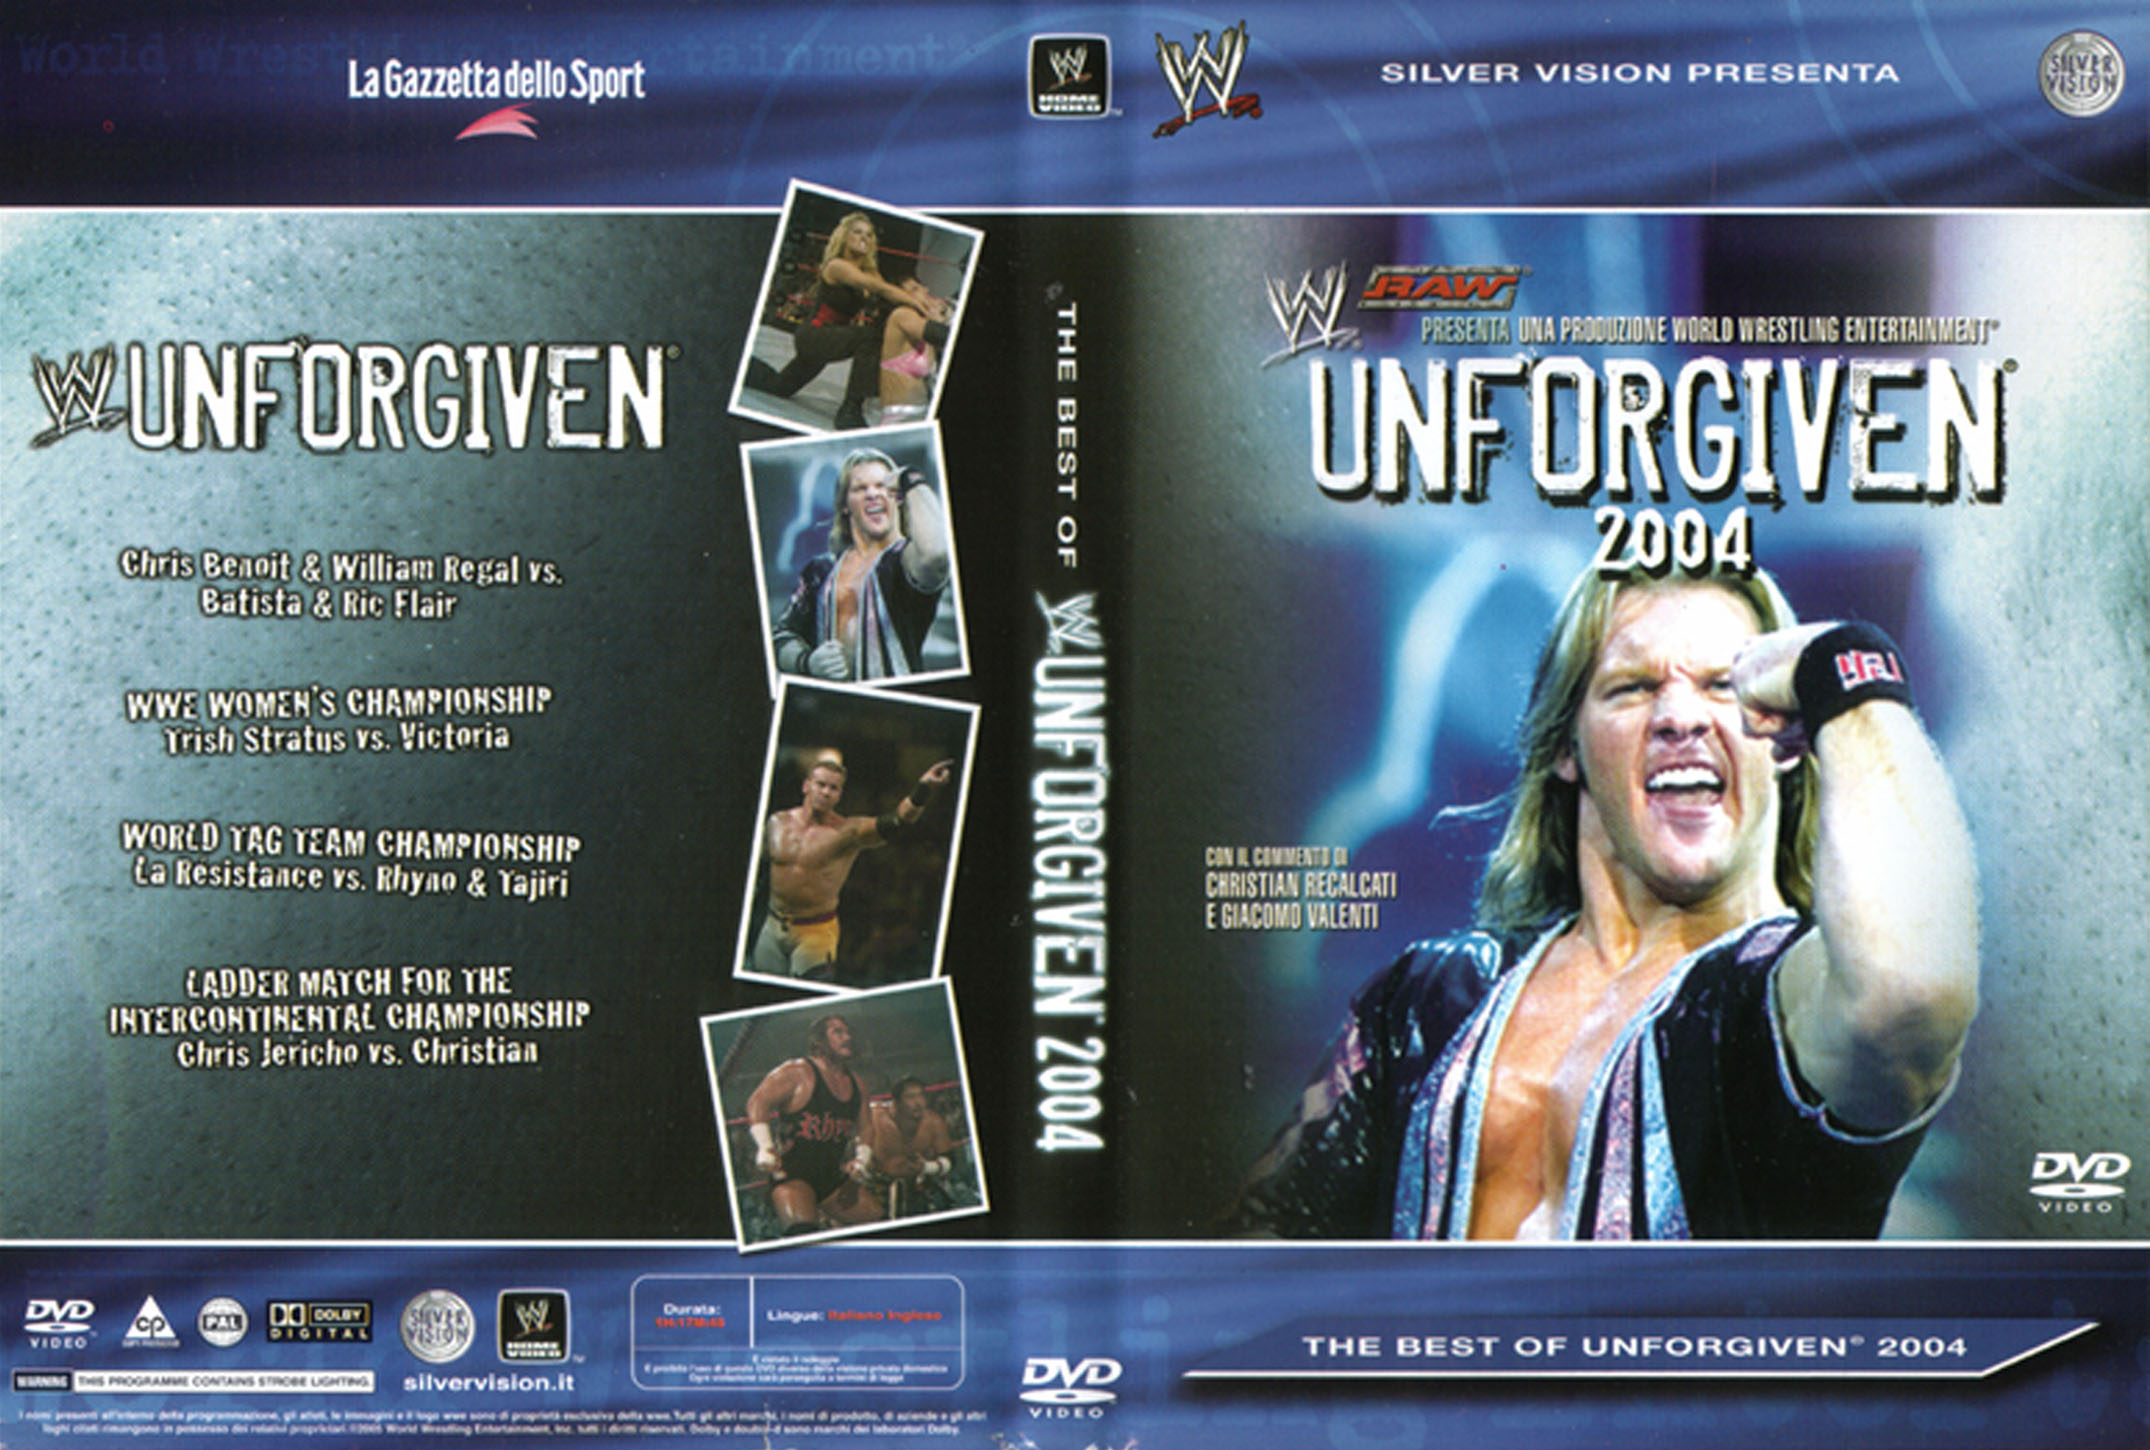 Jaquette DVD WWE unforgiven 2004